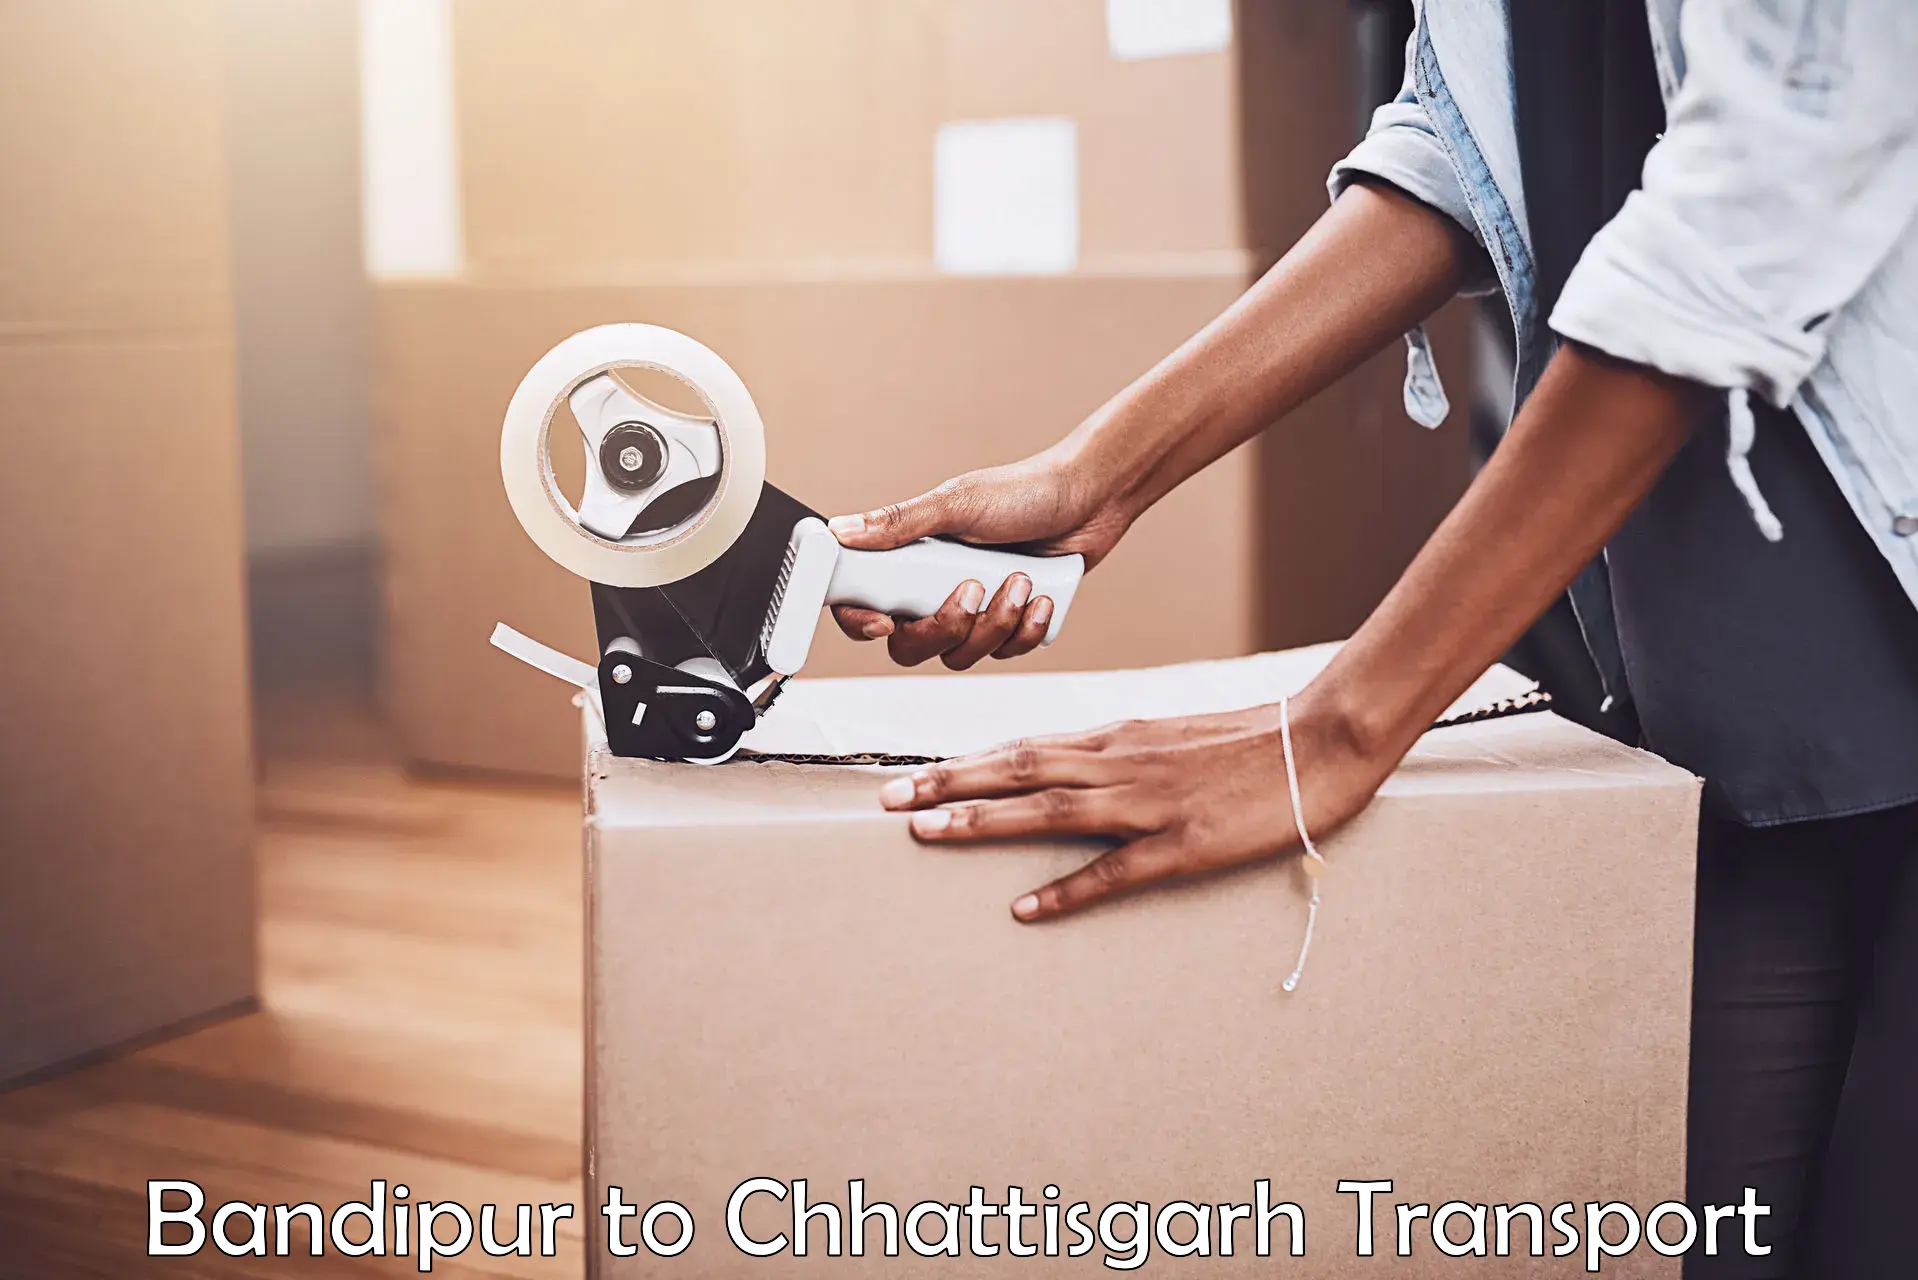 Truck transport companies in India Bandipur to Khairagarh